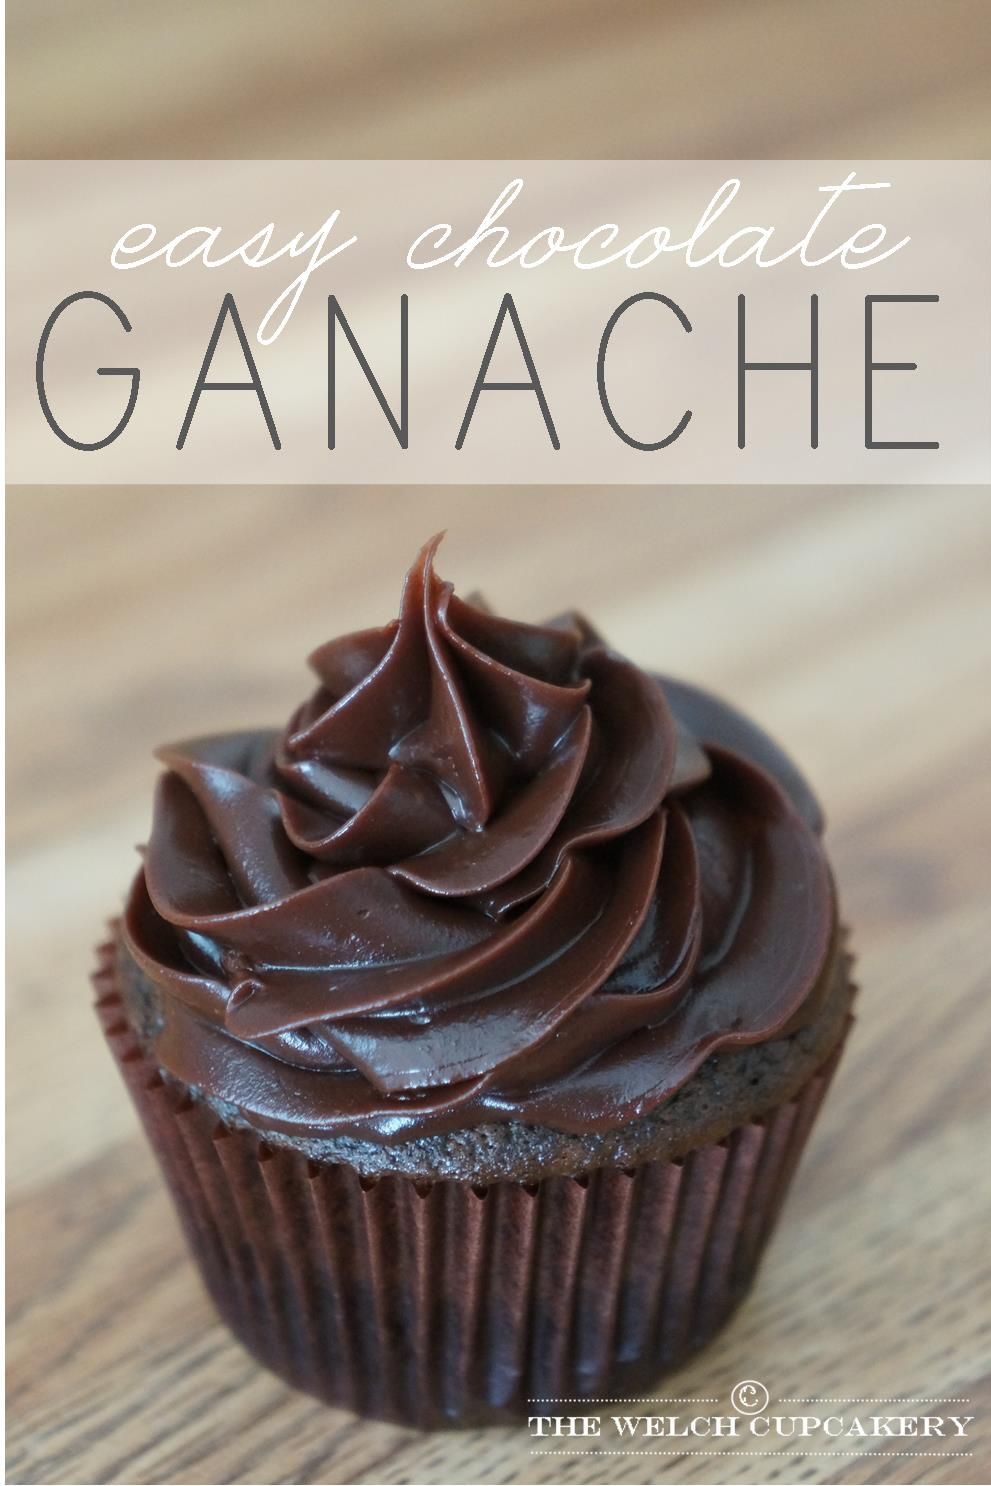 Easy Chocolate Ganache recipe via The Welch Cupcakery